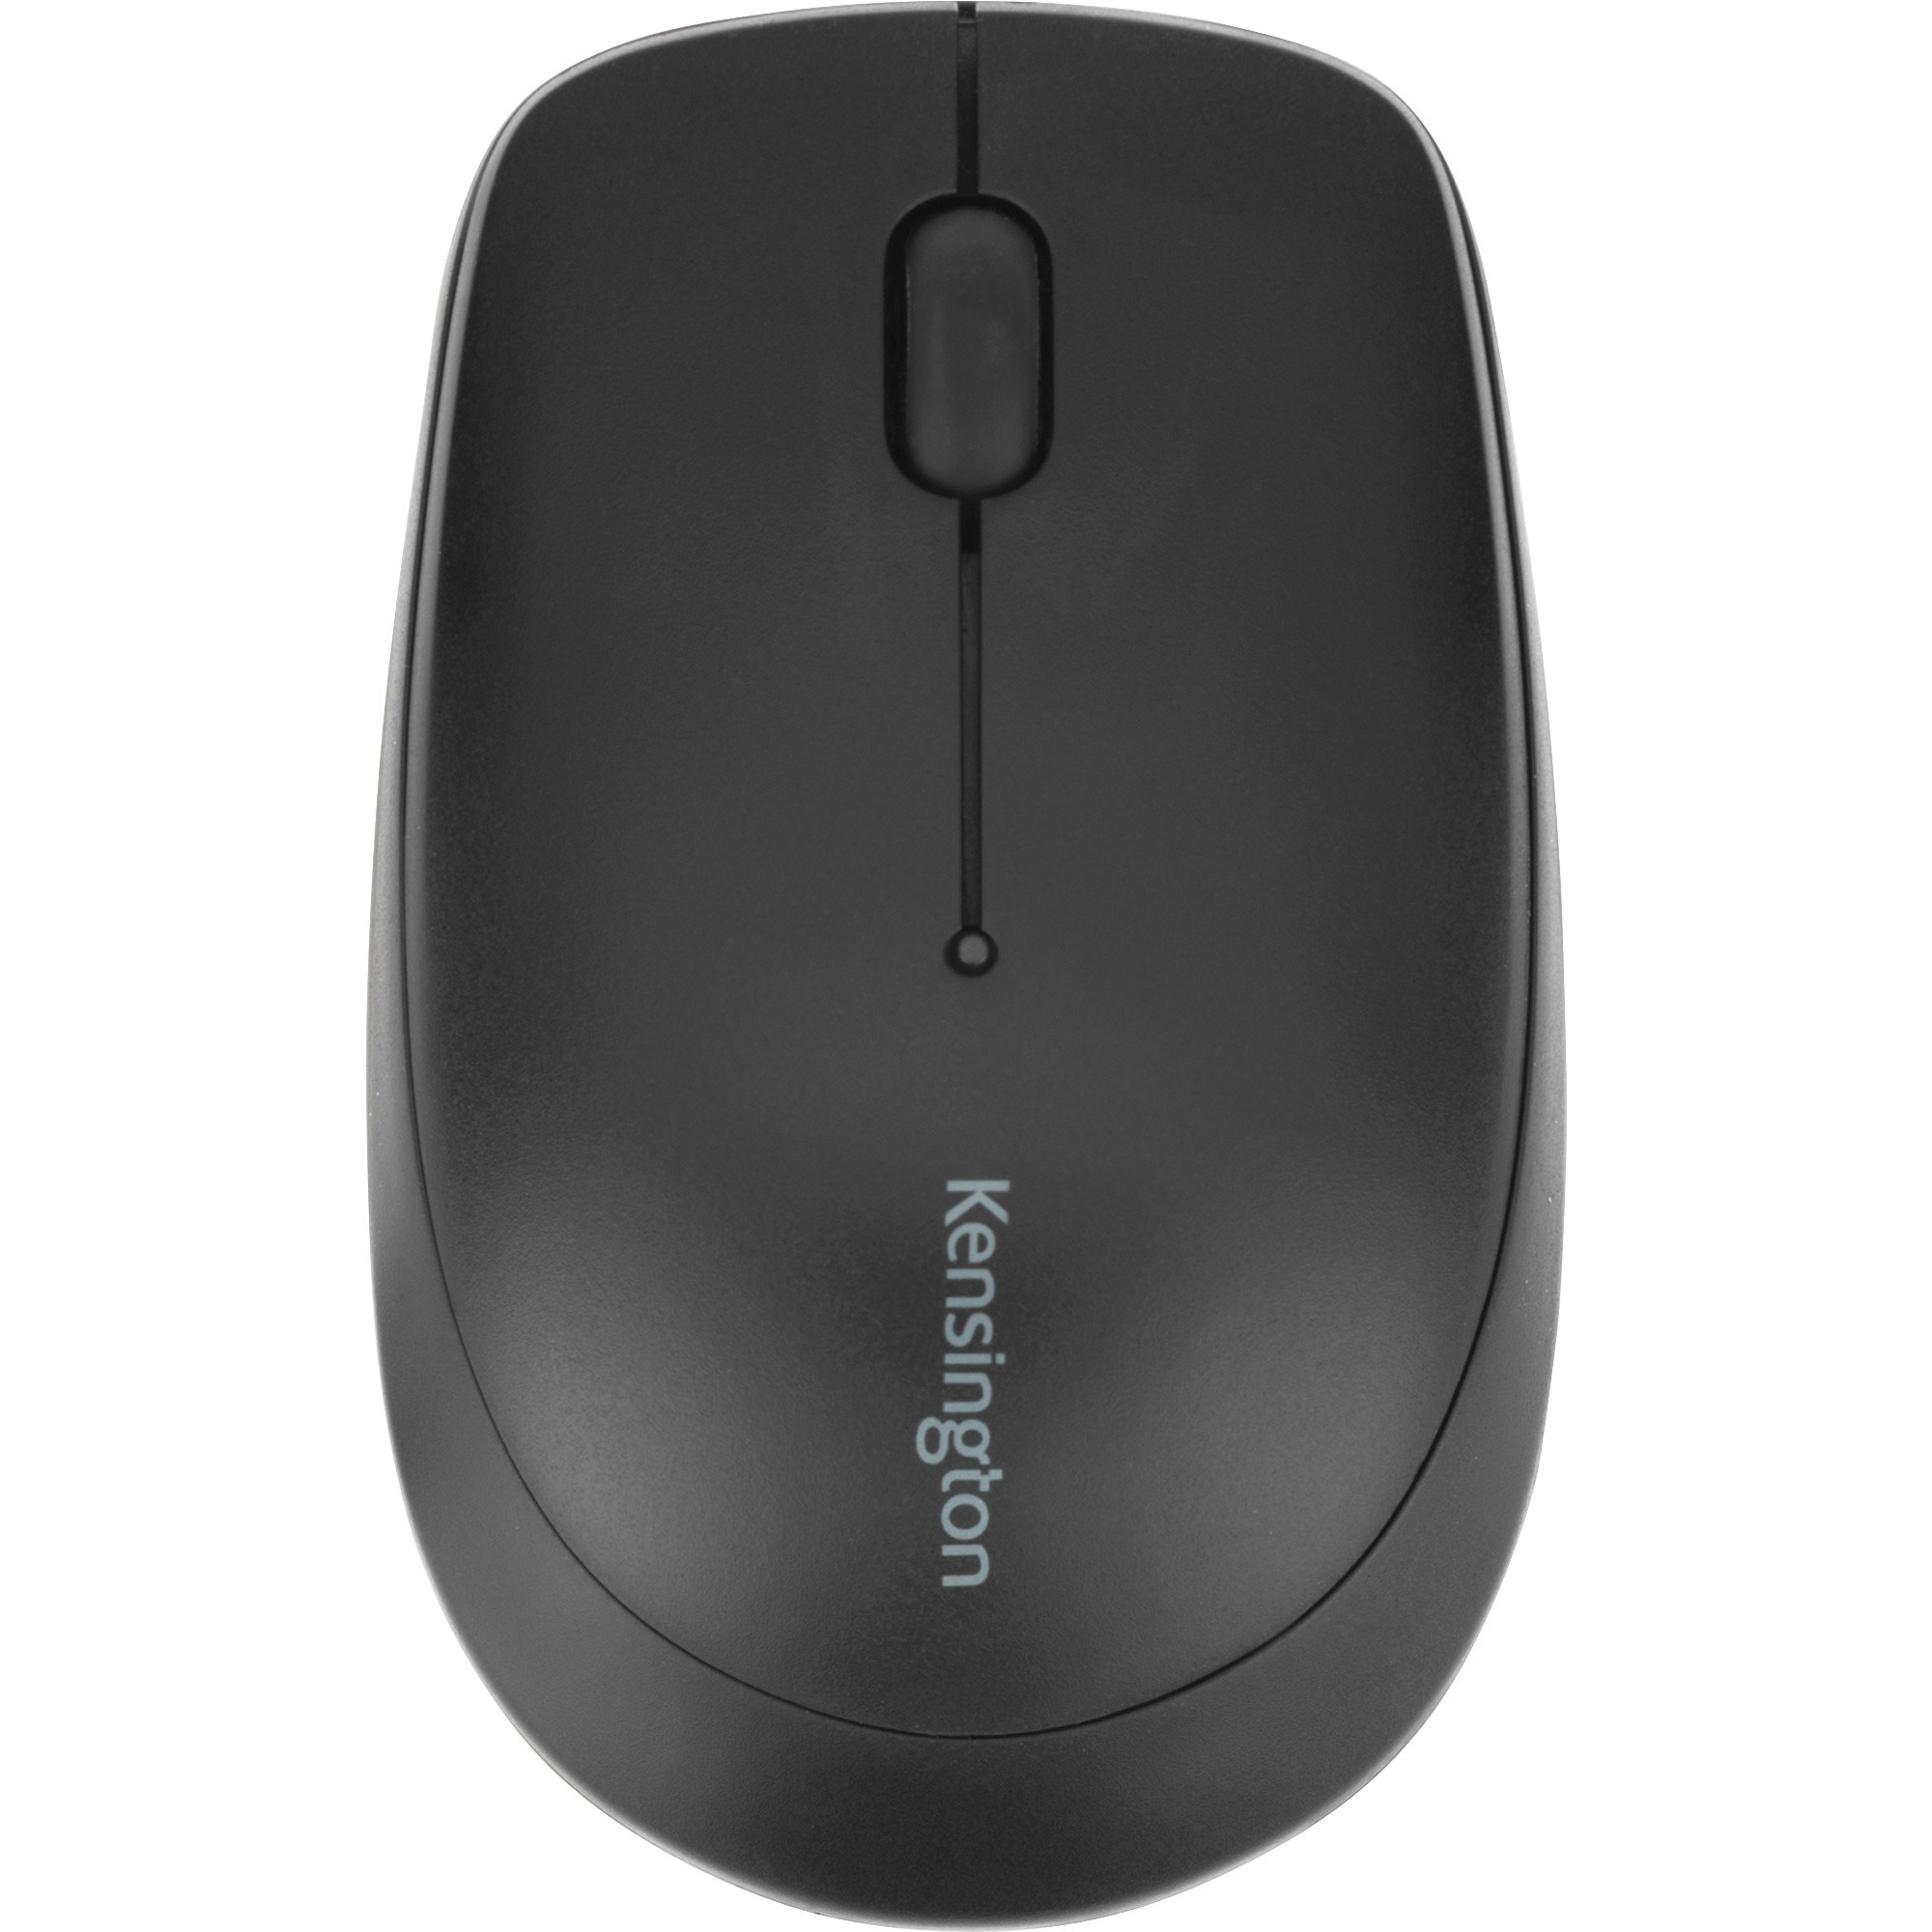 kensington expert mouse sensor accuracy